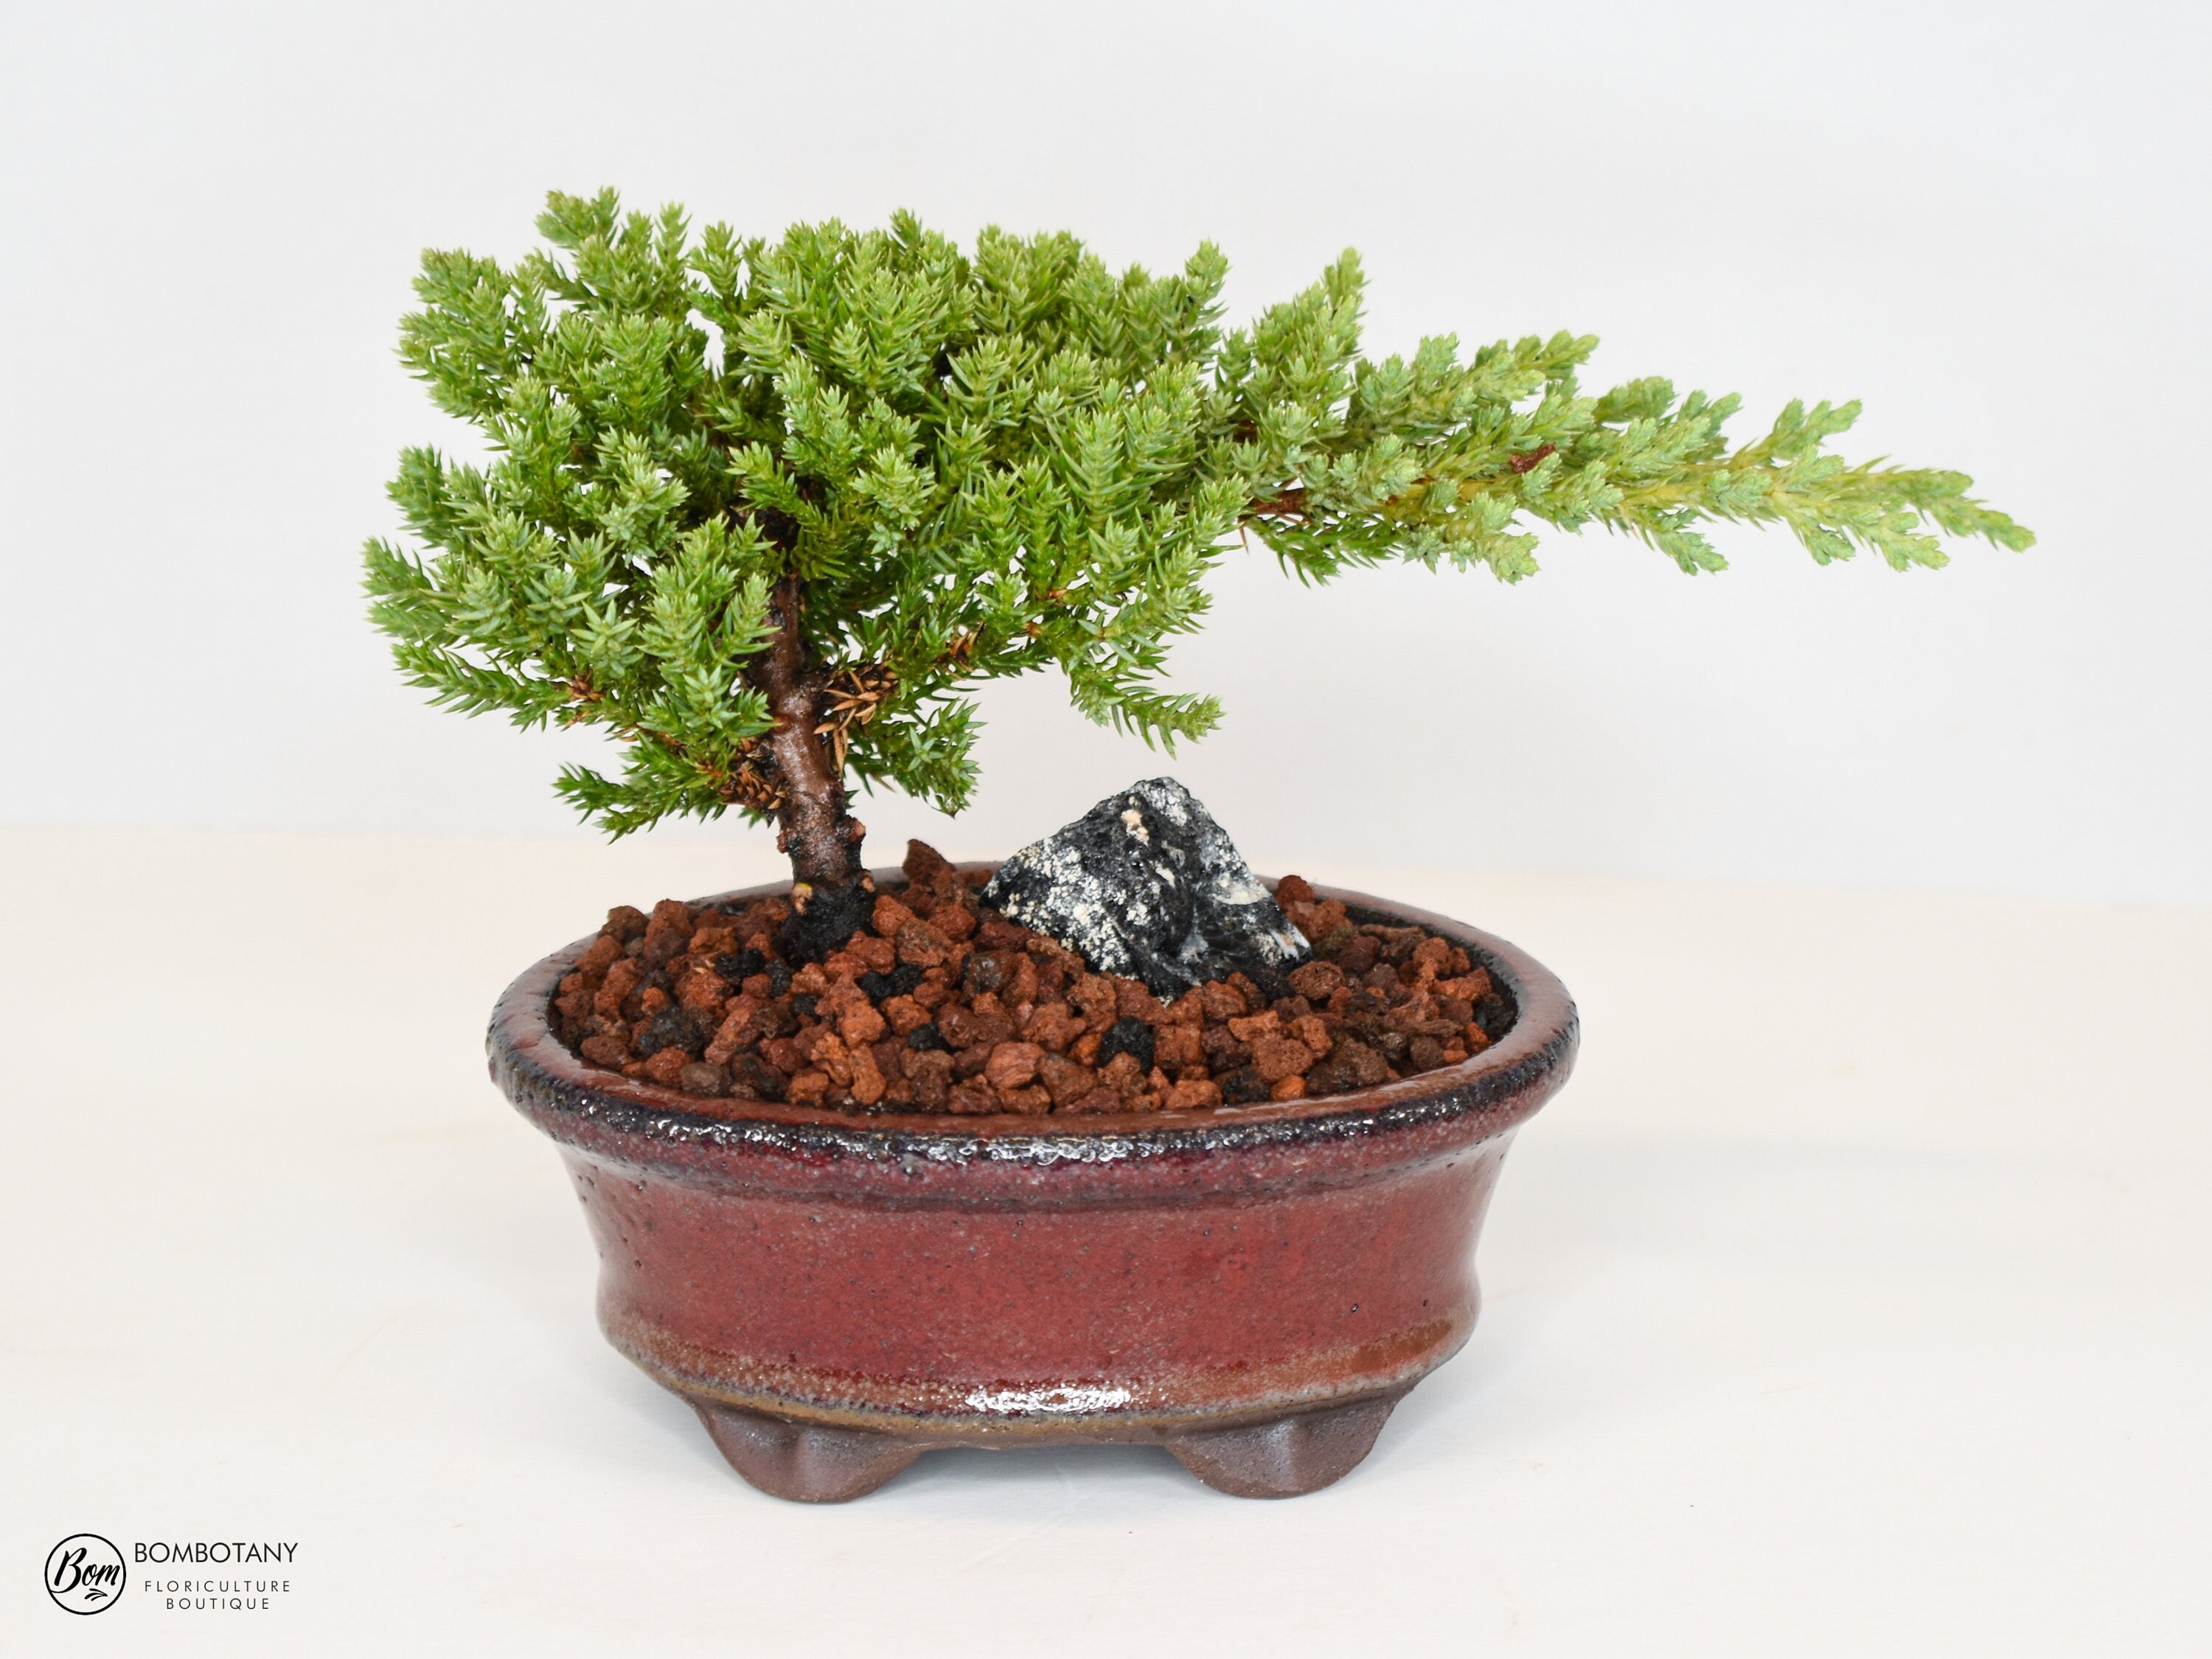 Juniper Procumbens 'Nana' Bonsai Tree in Traditional Ceramic - 3-4 Years Old